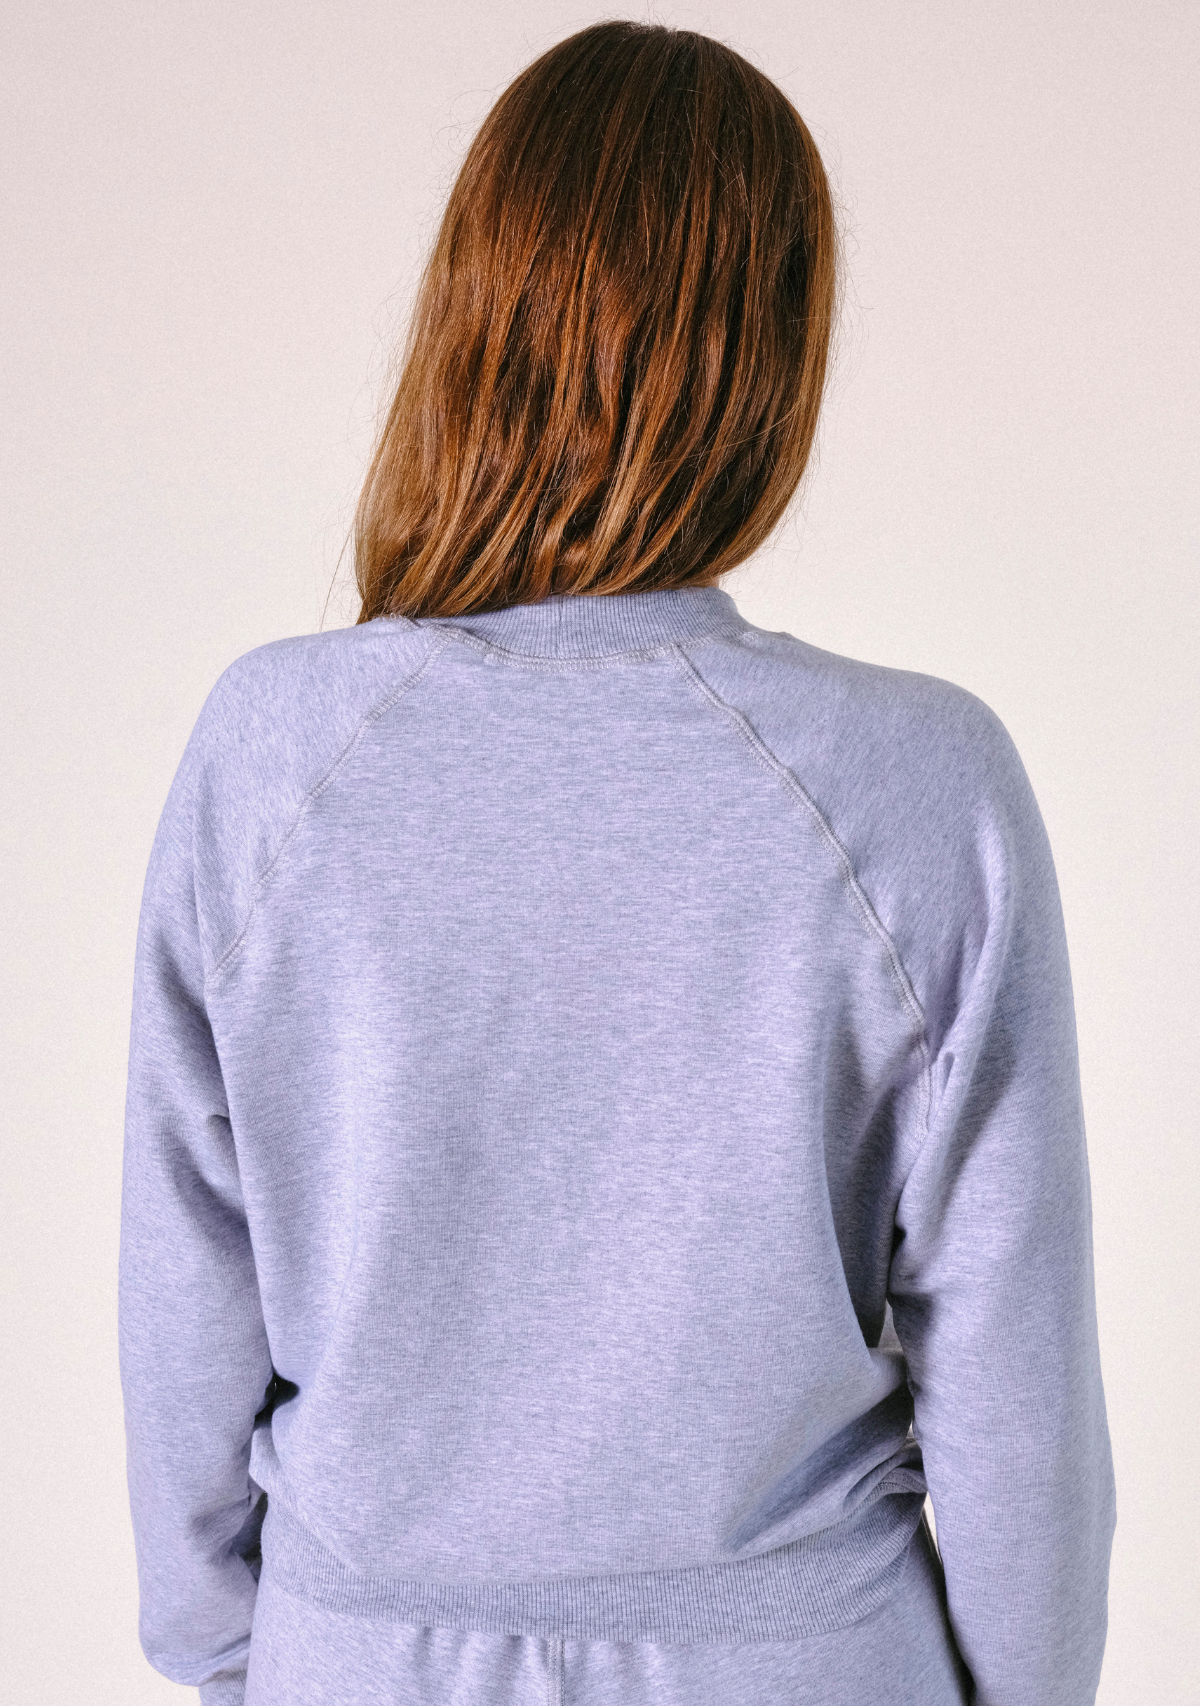 Women's Raglan Organic Cotton and Tencel™ Sweatshirt - Heather Gray XS-3X